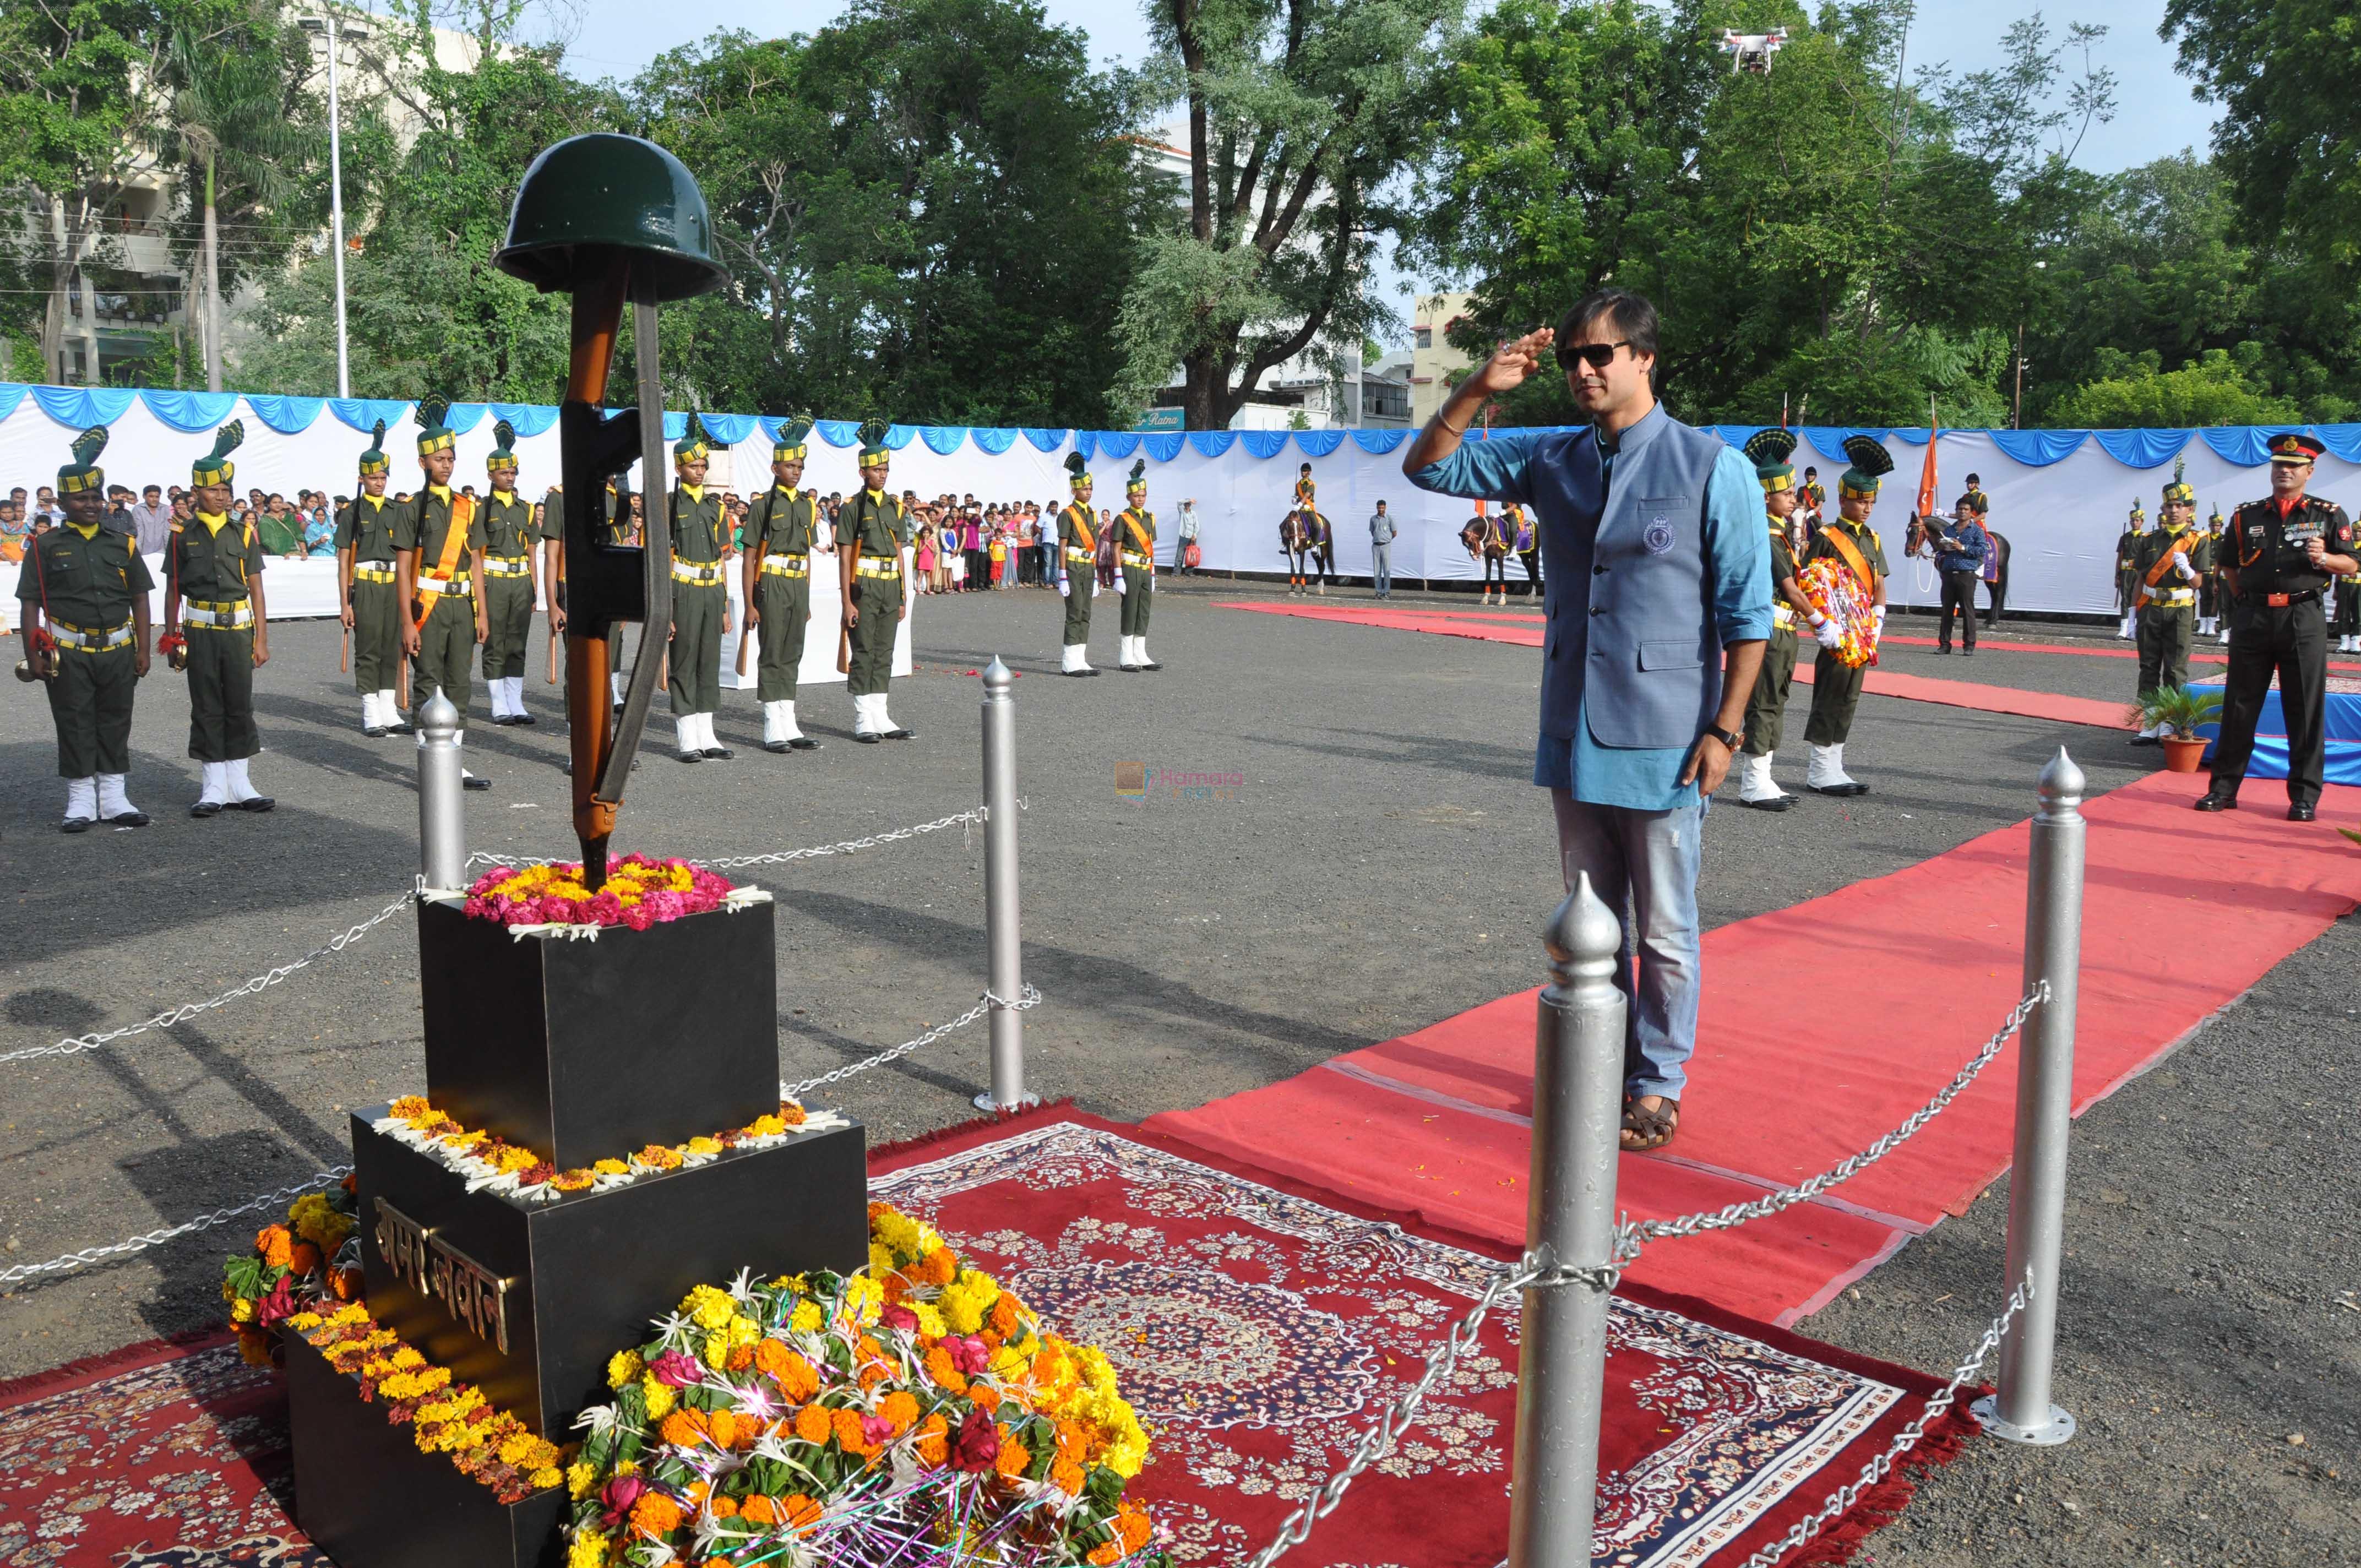 Vivek Oberoi celebrates Kargil Diwas at the Bhonsale Military School in Nagpur on 28th July 2015